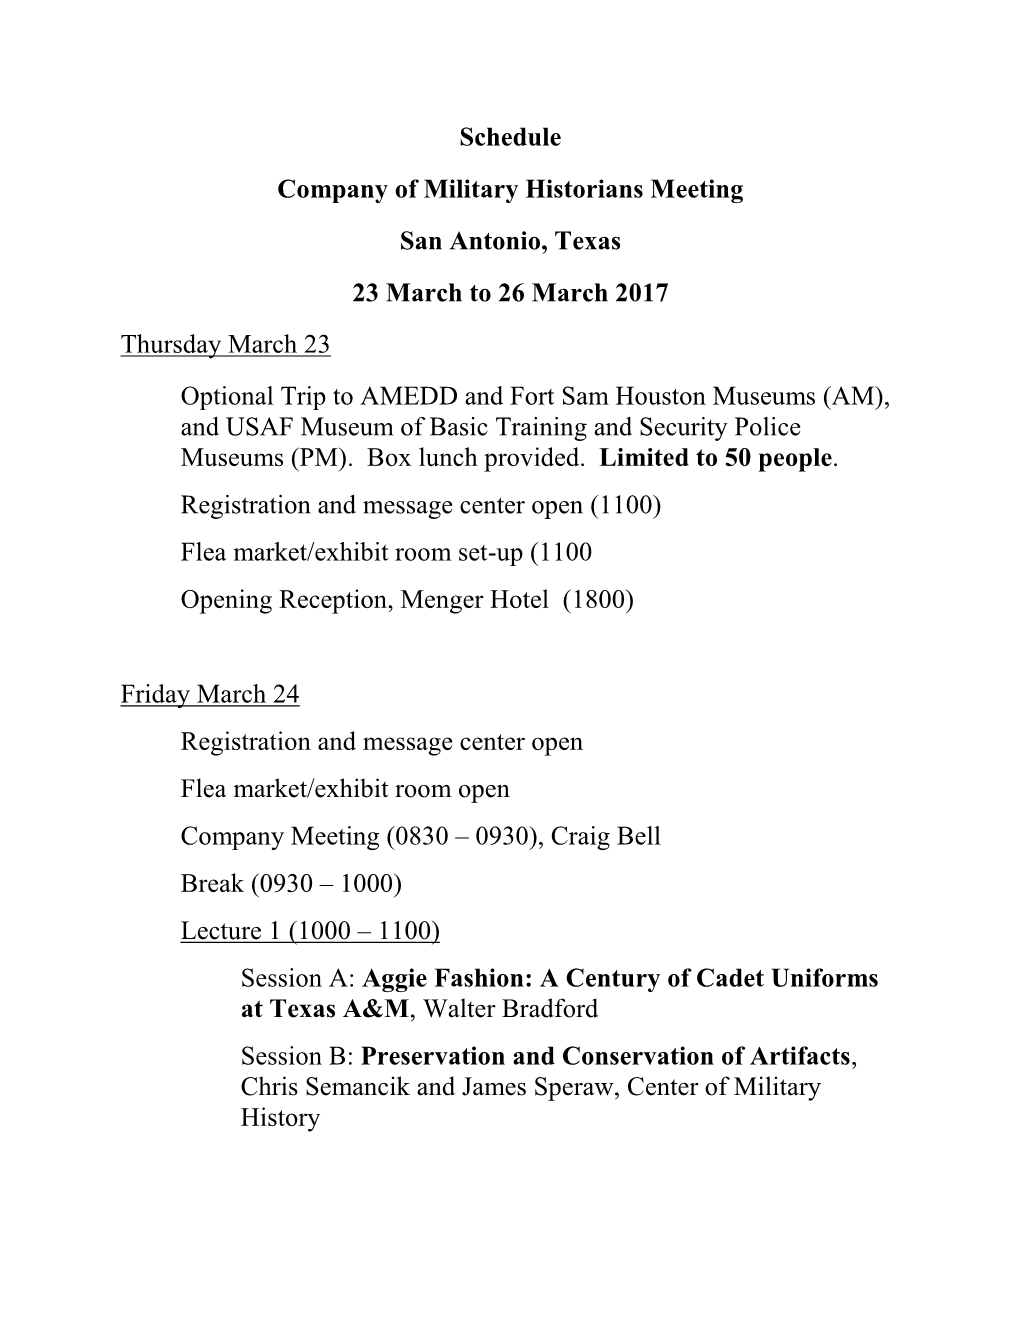 Schedule Company of Military Historians Meeting San Antonio